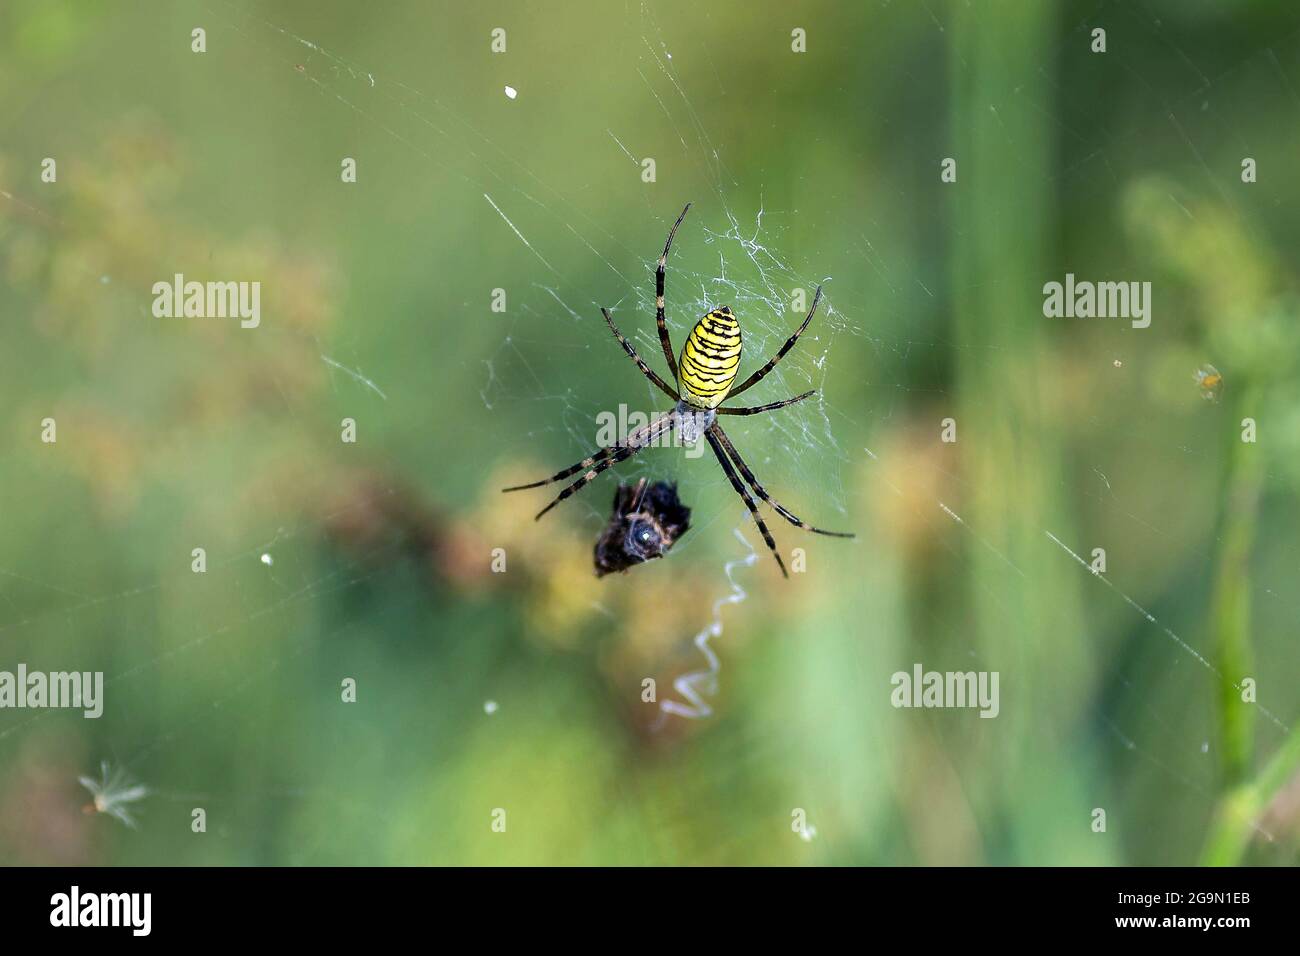 Striped yellow and black wasp spider Argiope Bruennichi on its web Stock Photo